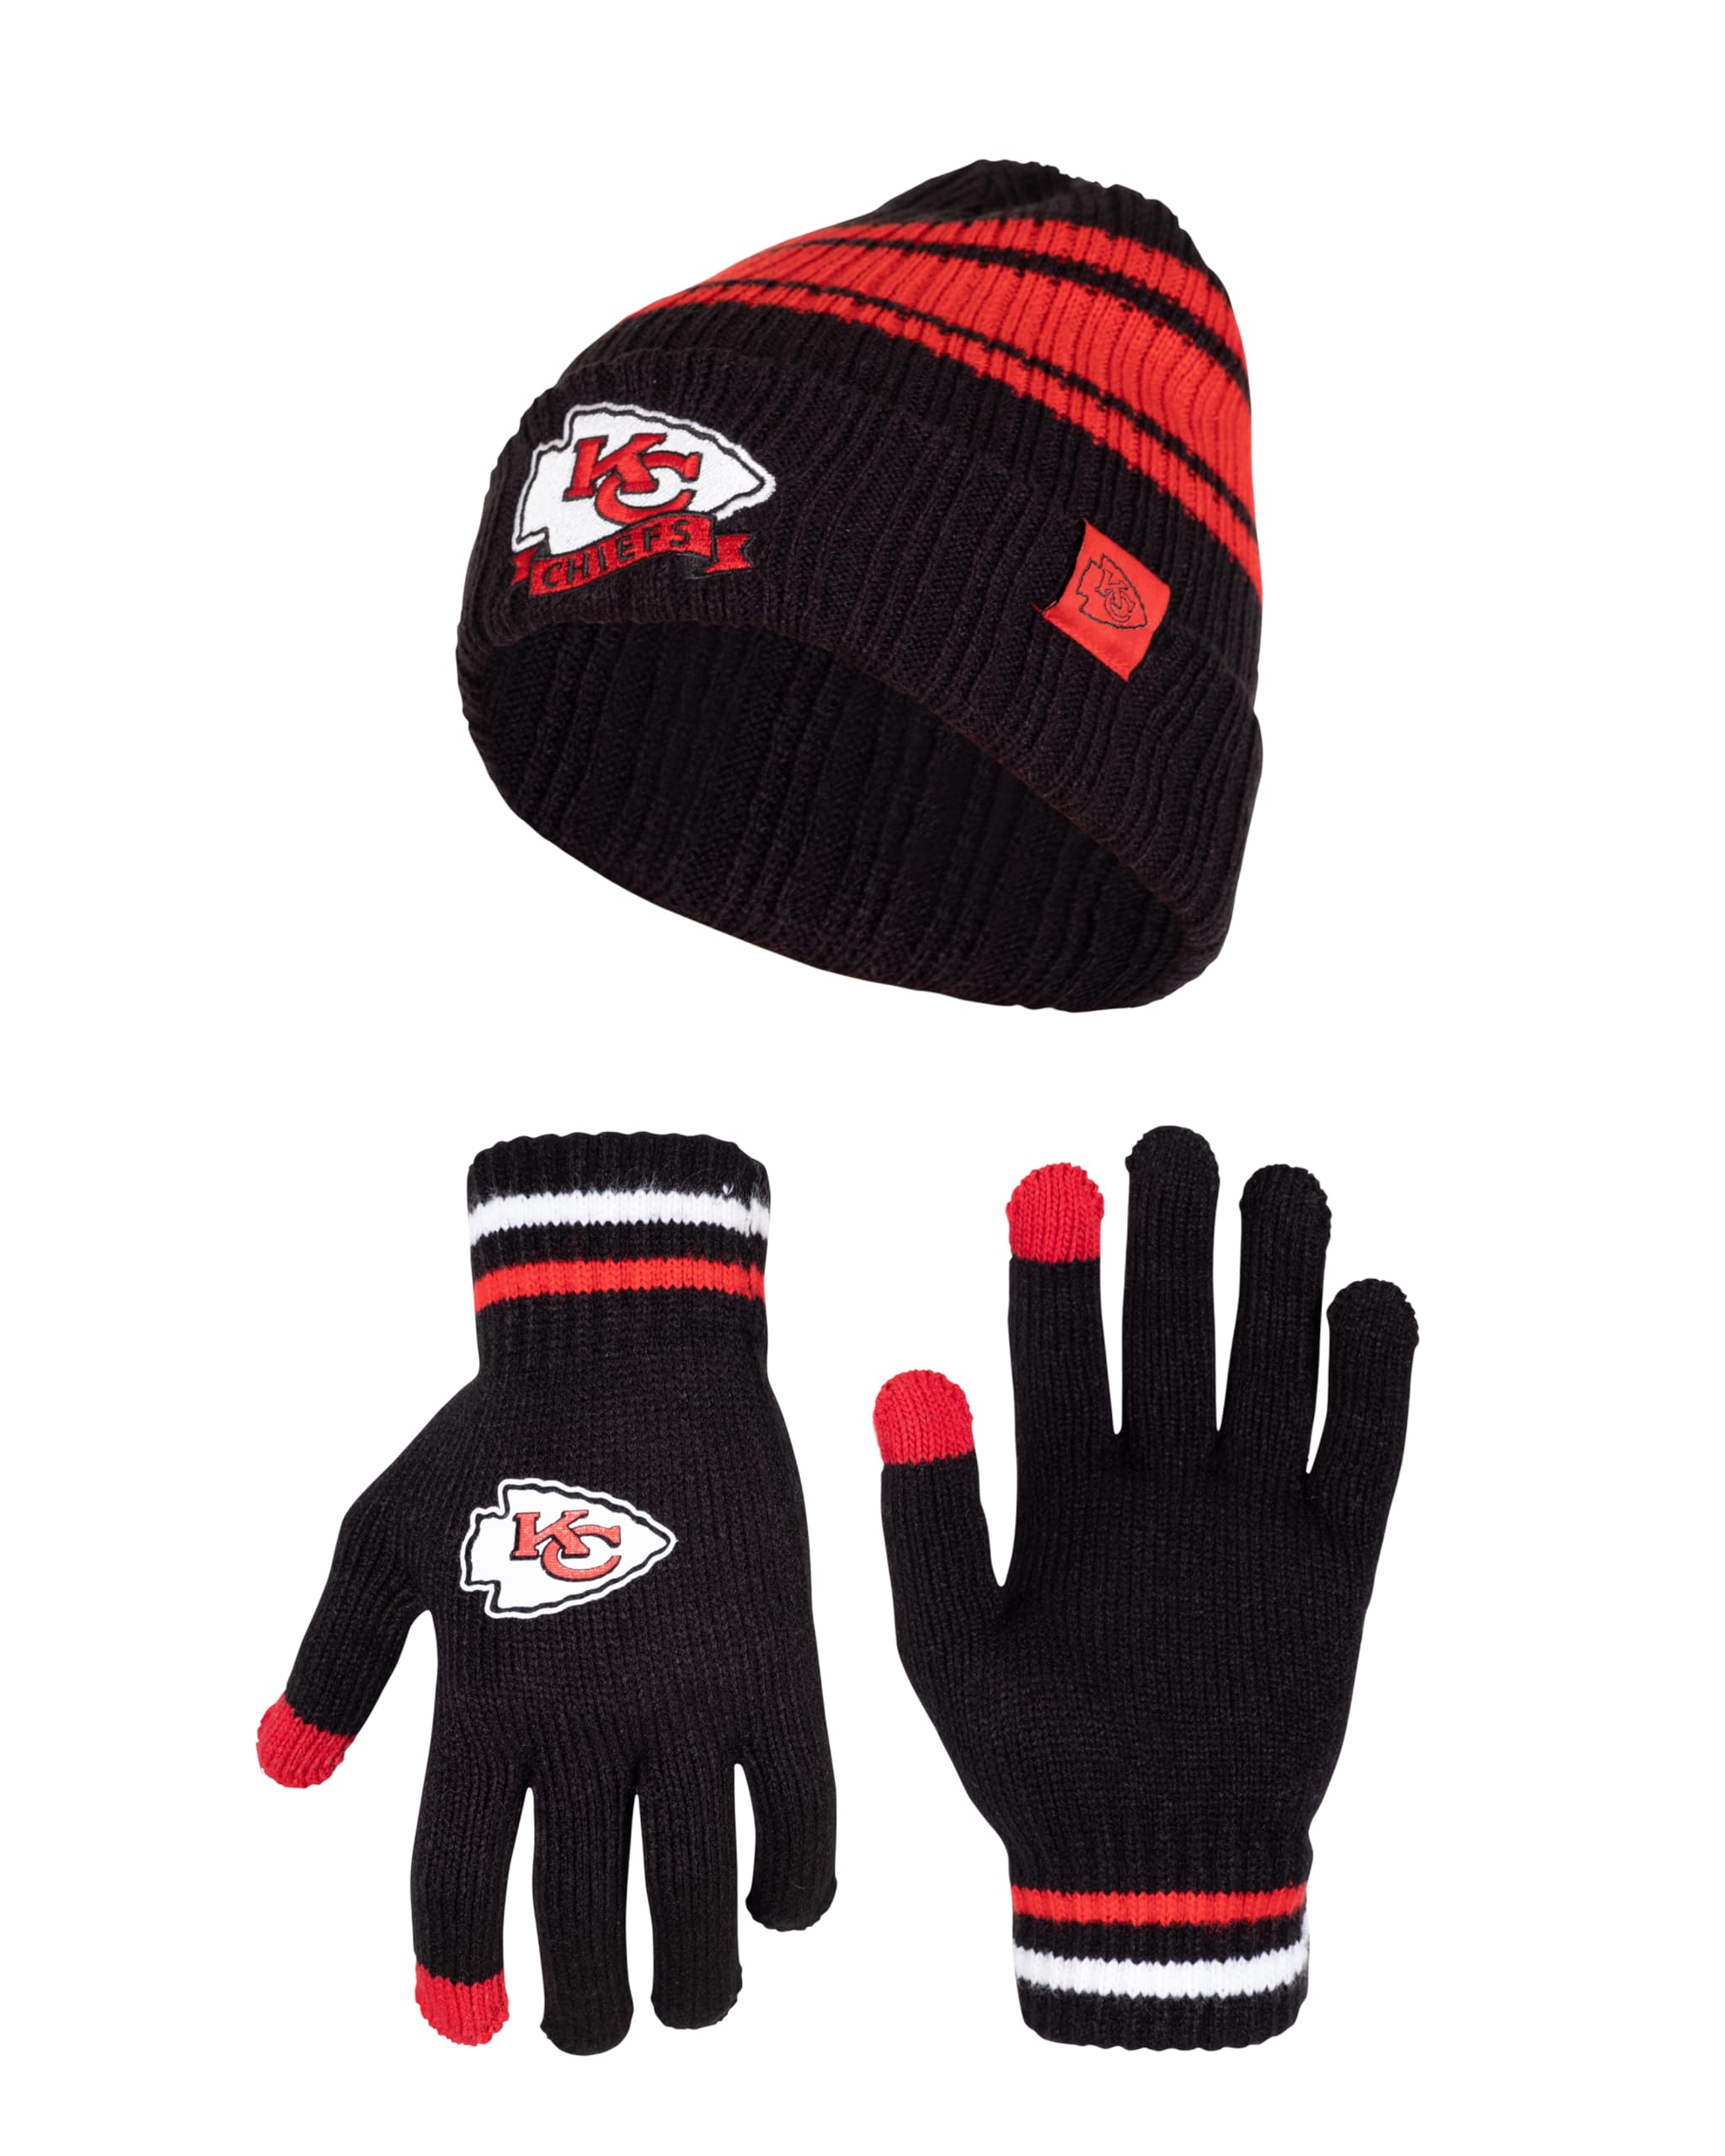 Ultra Game NFL Kansas City Chiefs Womens Super Soft Team Stripe Winter Beanie Knit Hat with Extra Warm Touch Screen Gloves|Kansas City Chiefs - UltraGameShop